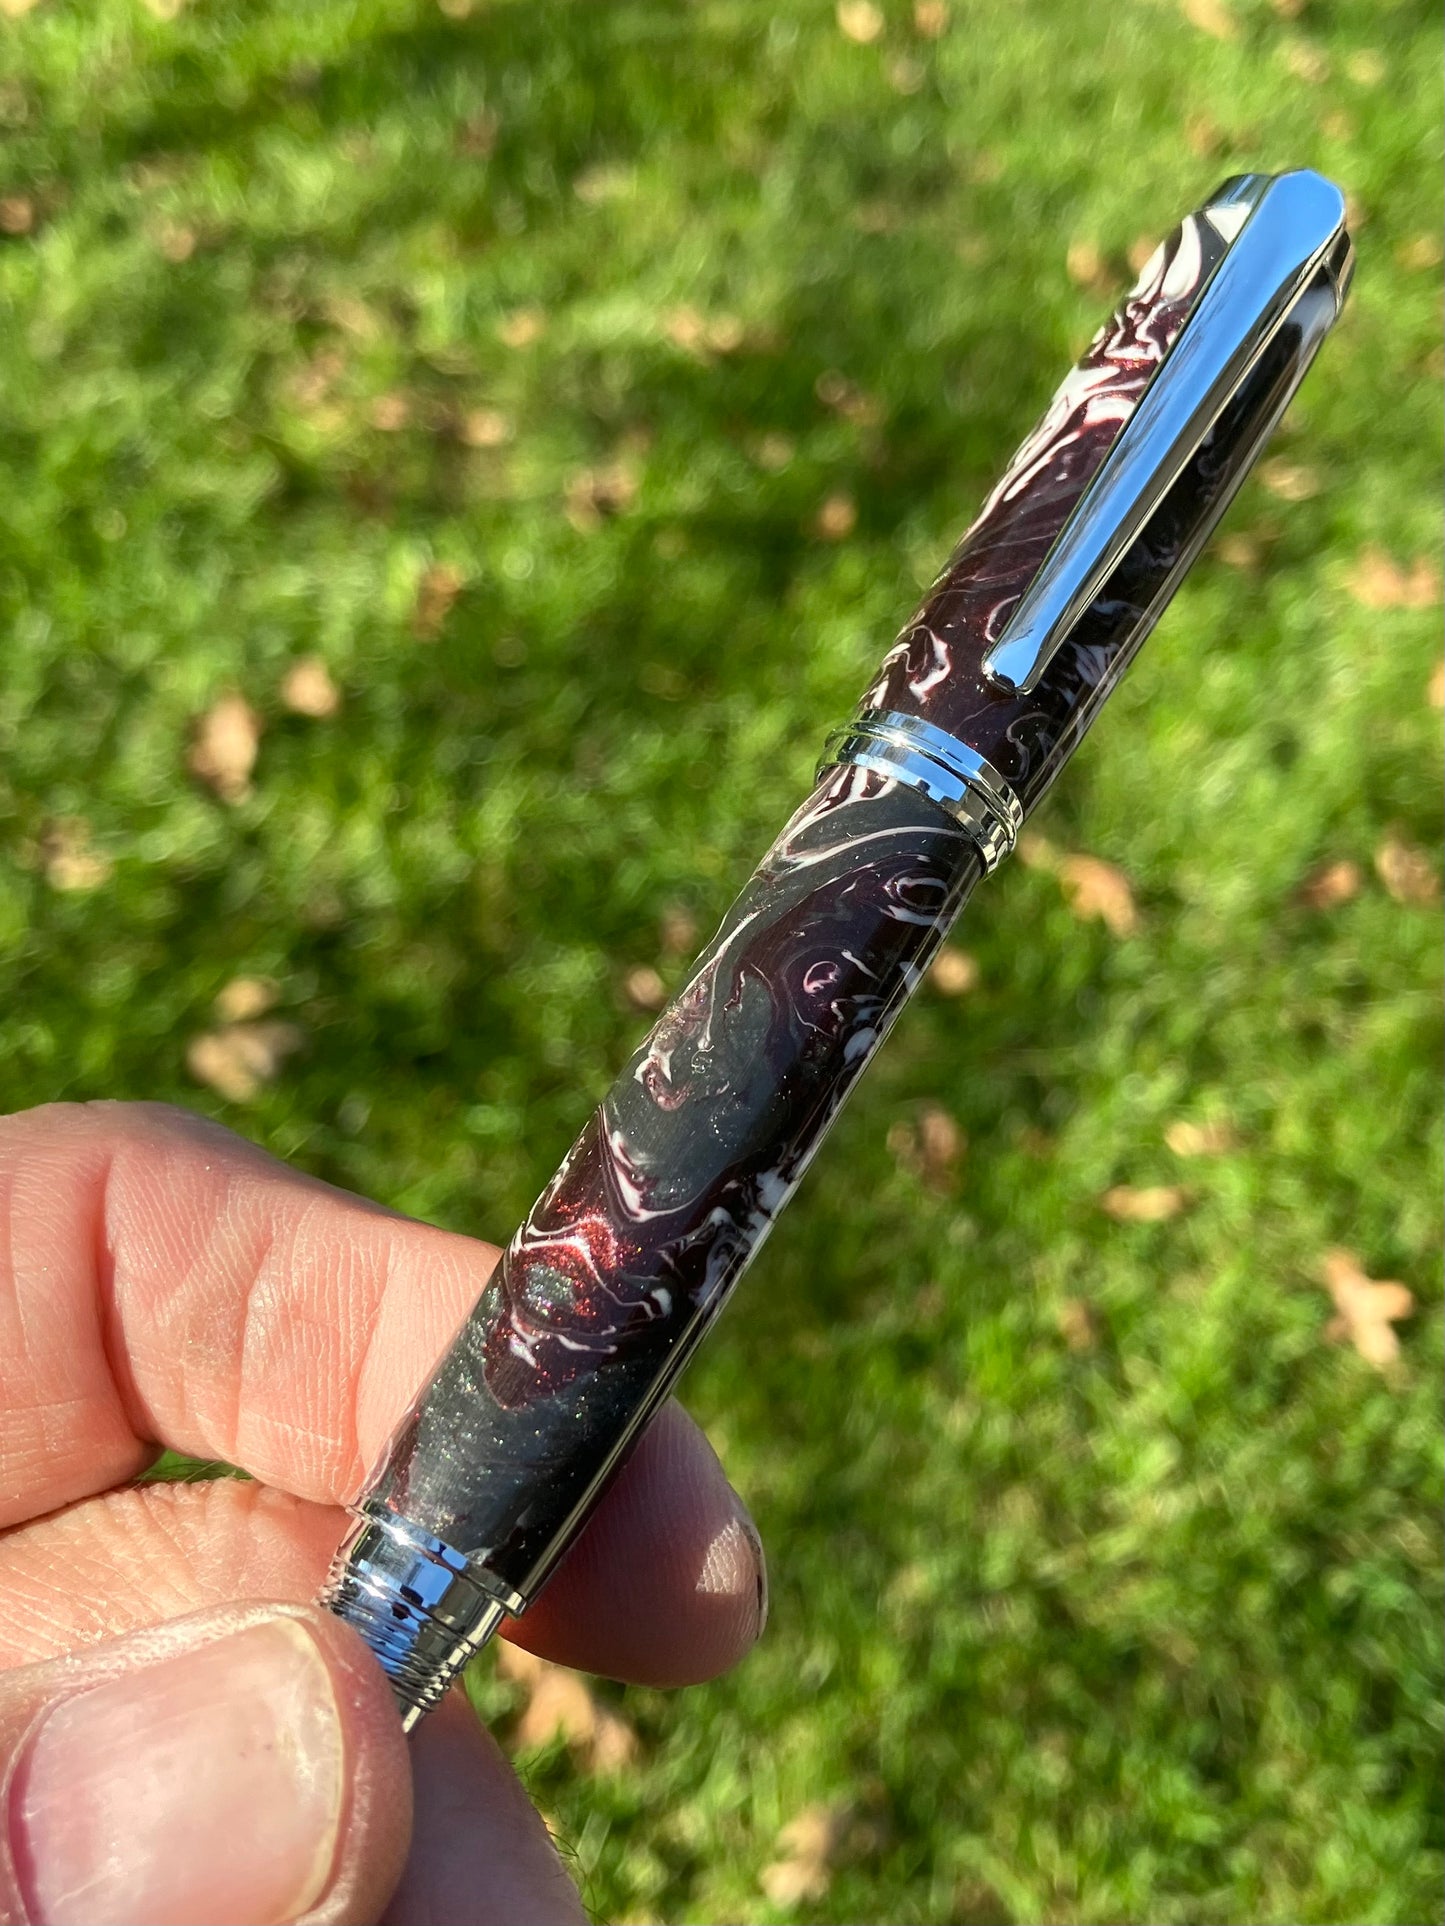 RB502-1023  Deep Purple Swirls - Handcrafted Rollerball Pen